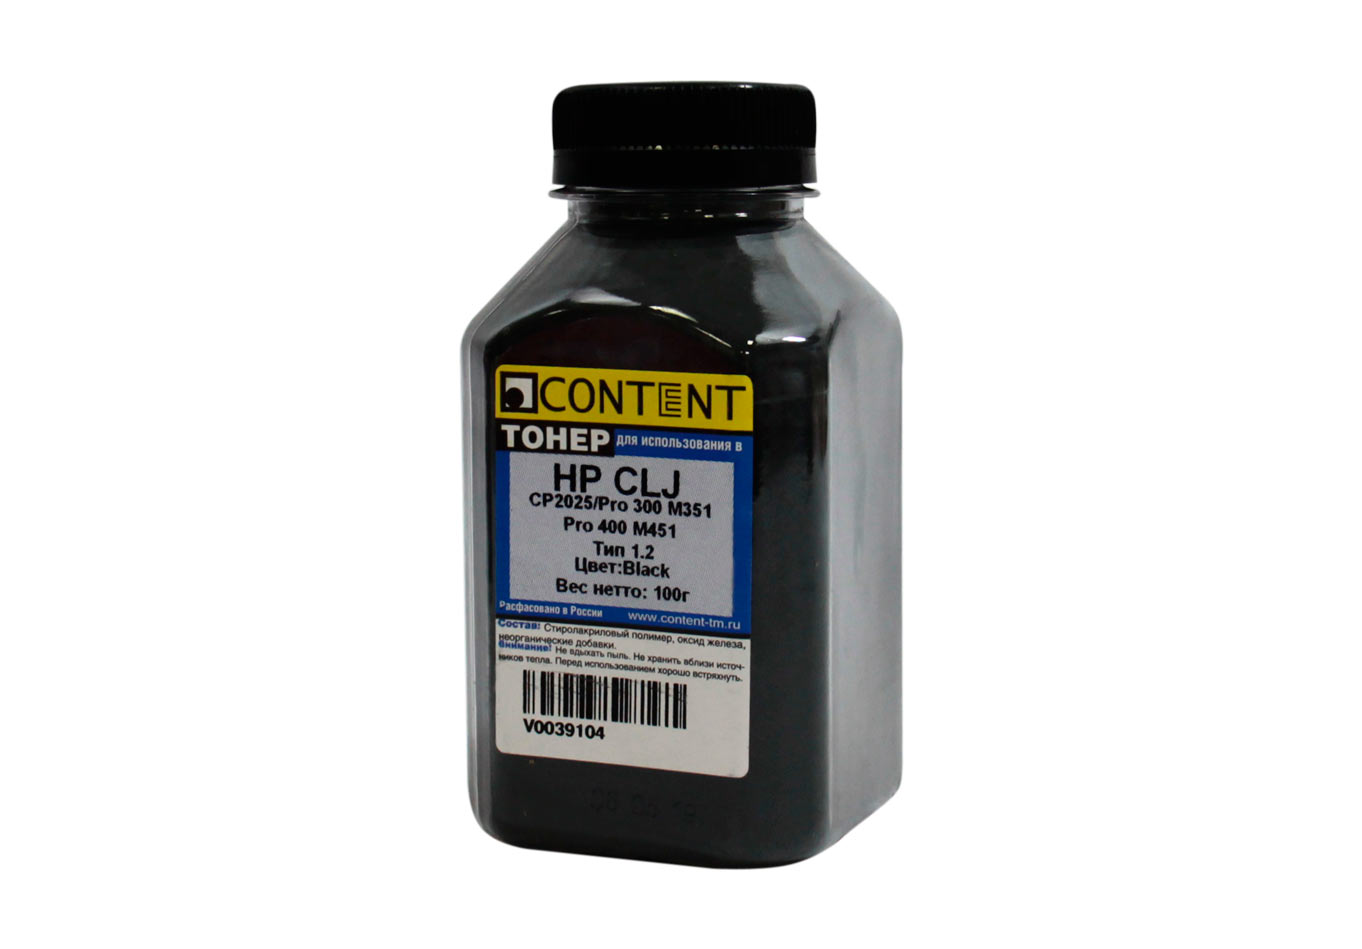 Тонер Content Тип 1.2, бутыль 100 г, черный, совместимый для CLJ CP2025, Pro 300 M351, 400 M451 (V0039104)